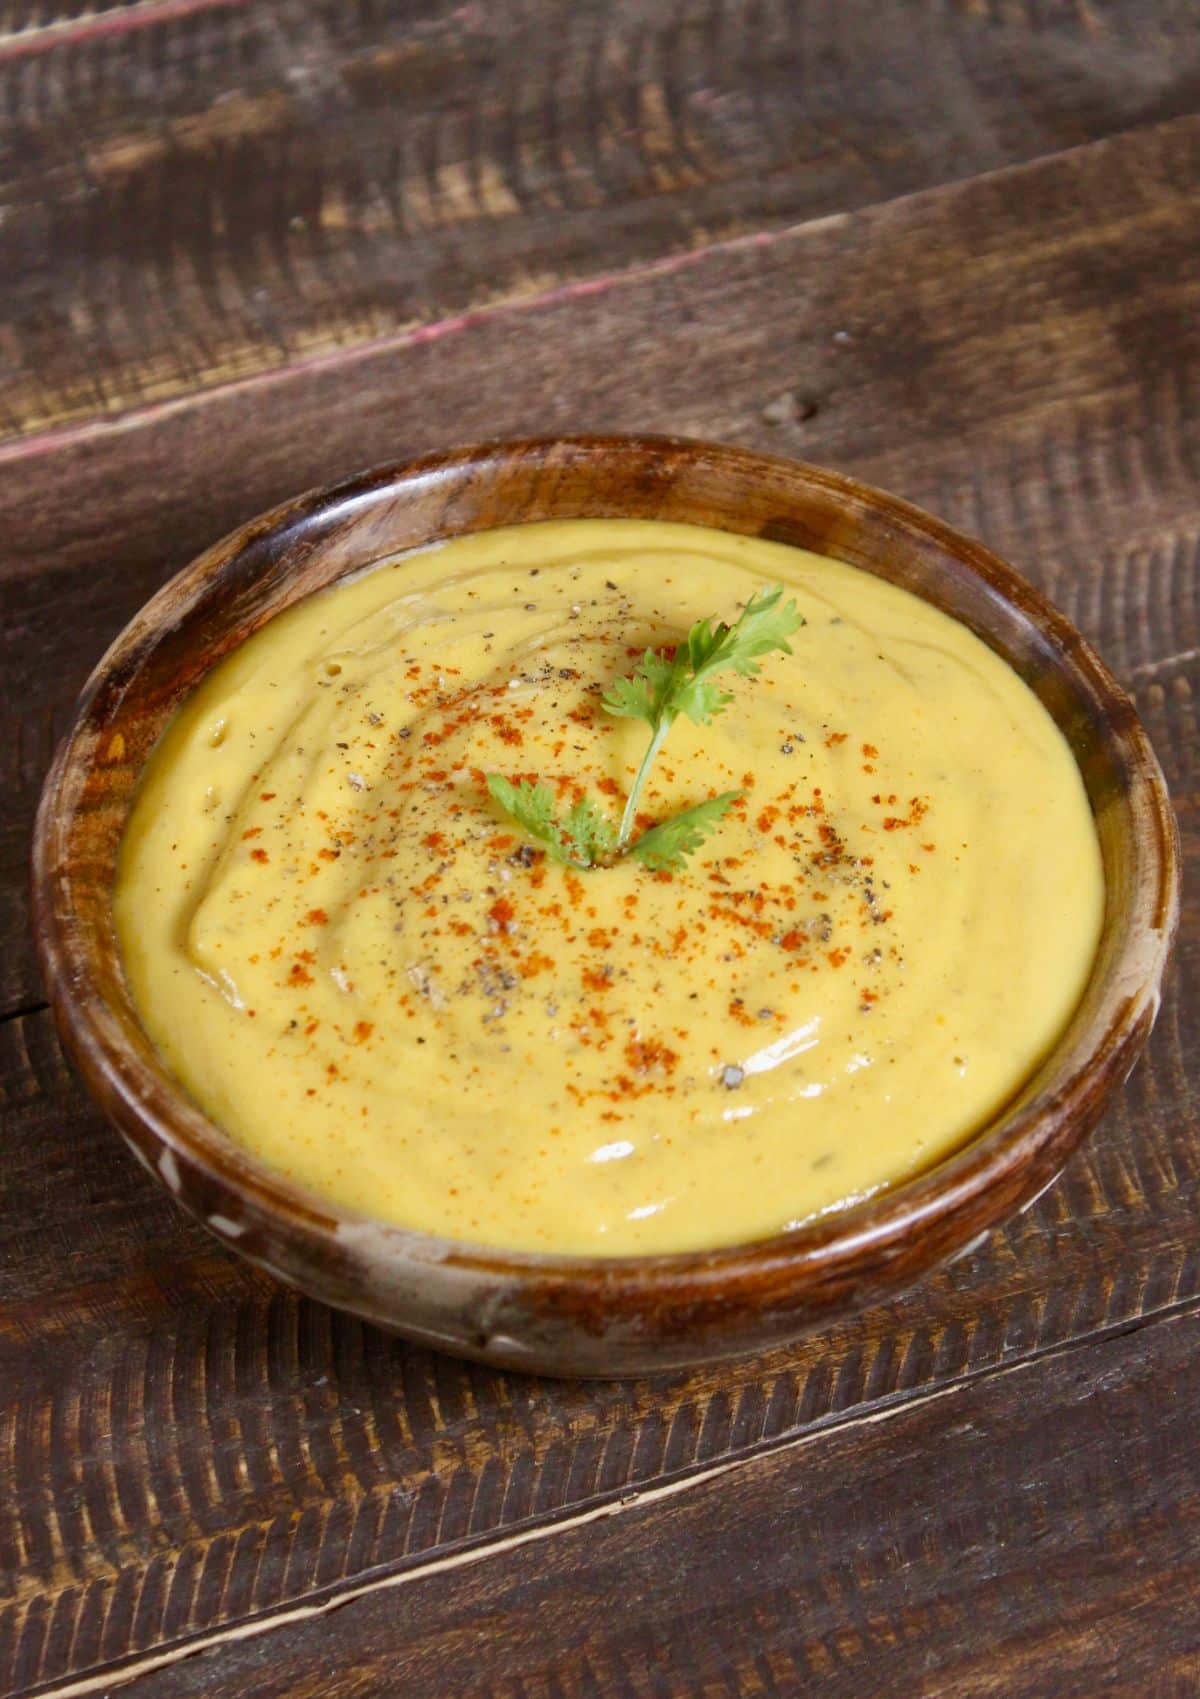 yummy Egyptian Yellow Lentil Soup ready to enjoy 